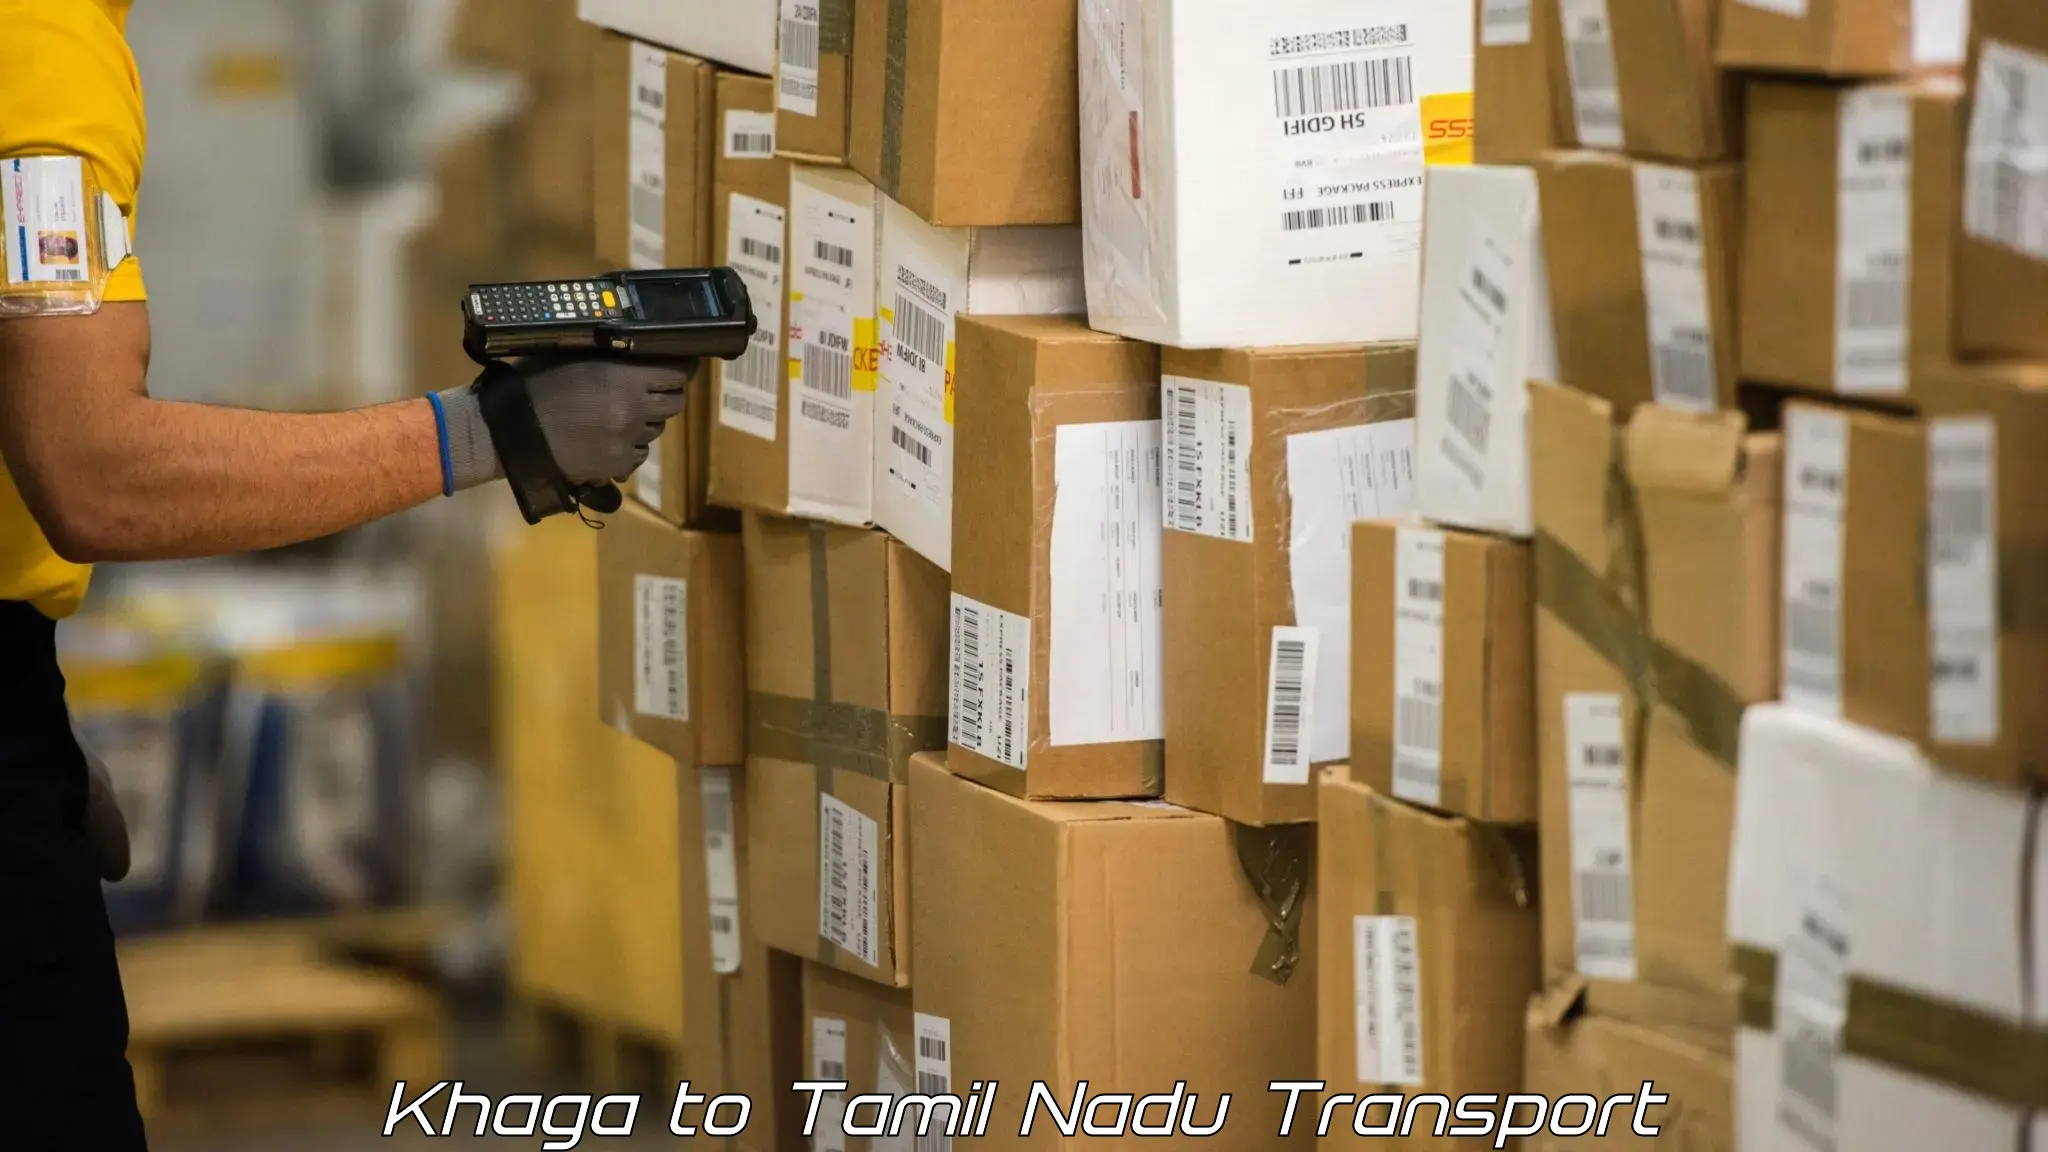 Transport in sharing Khaga to Tamil Nadu